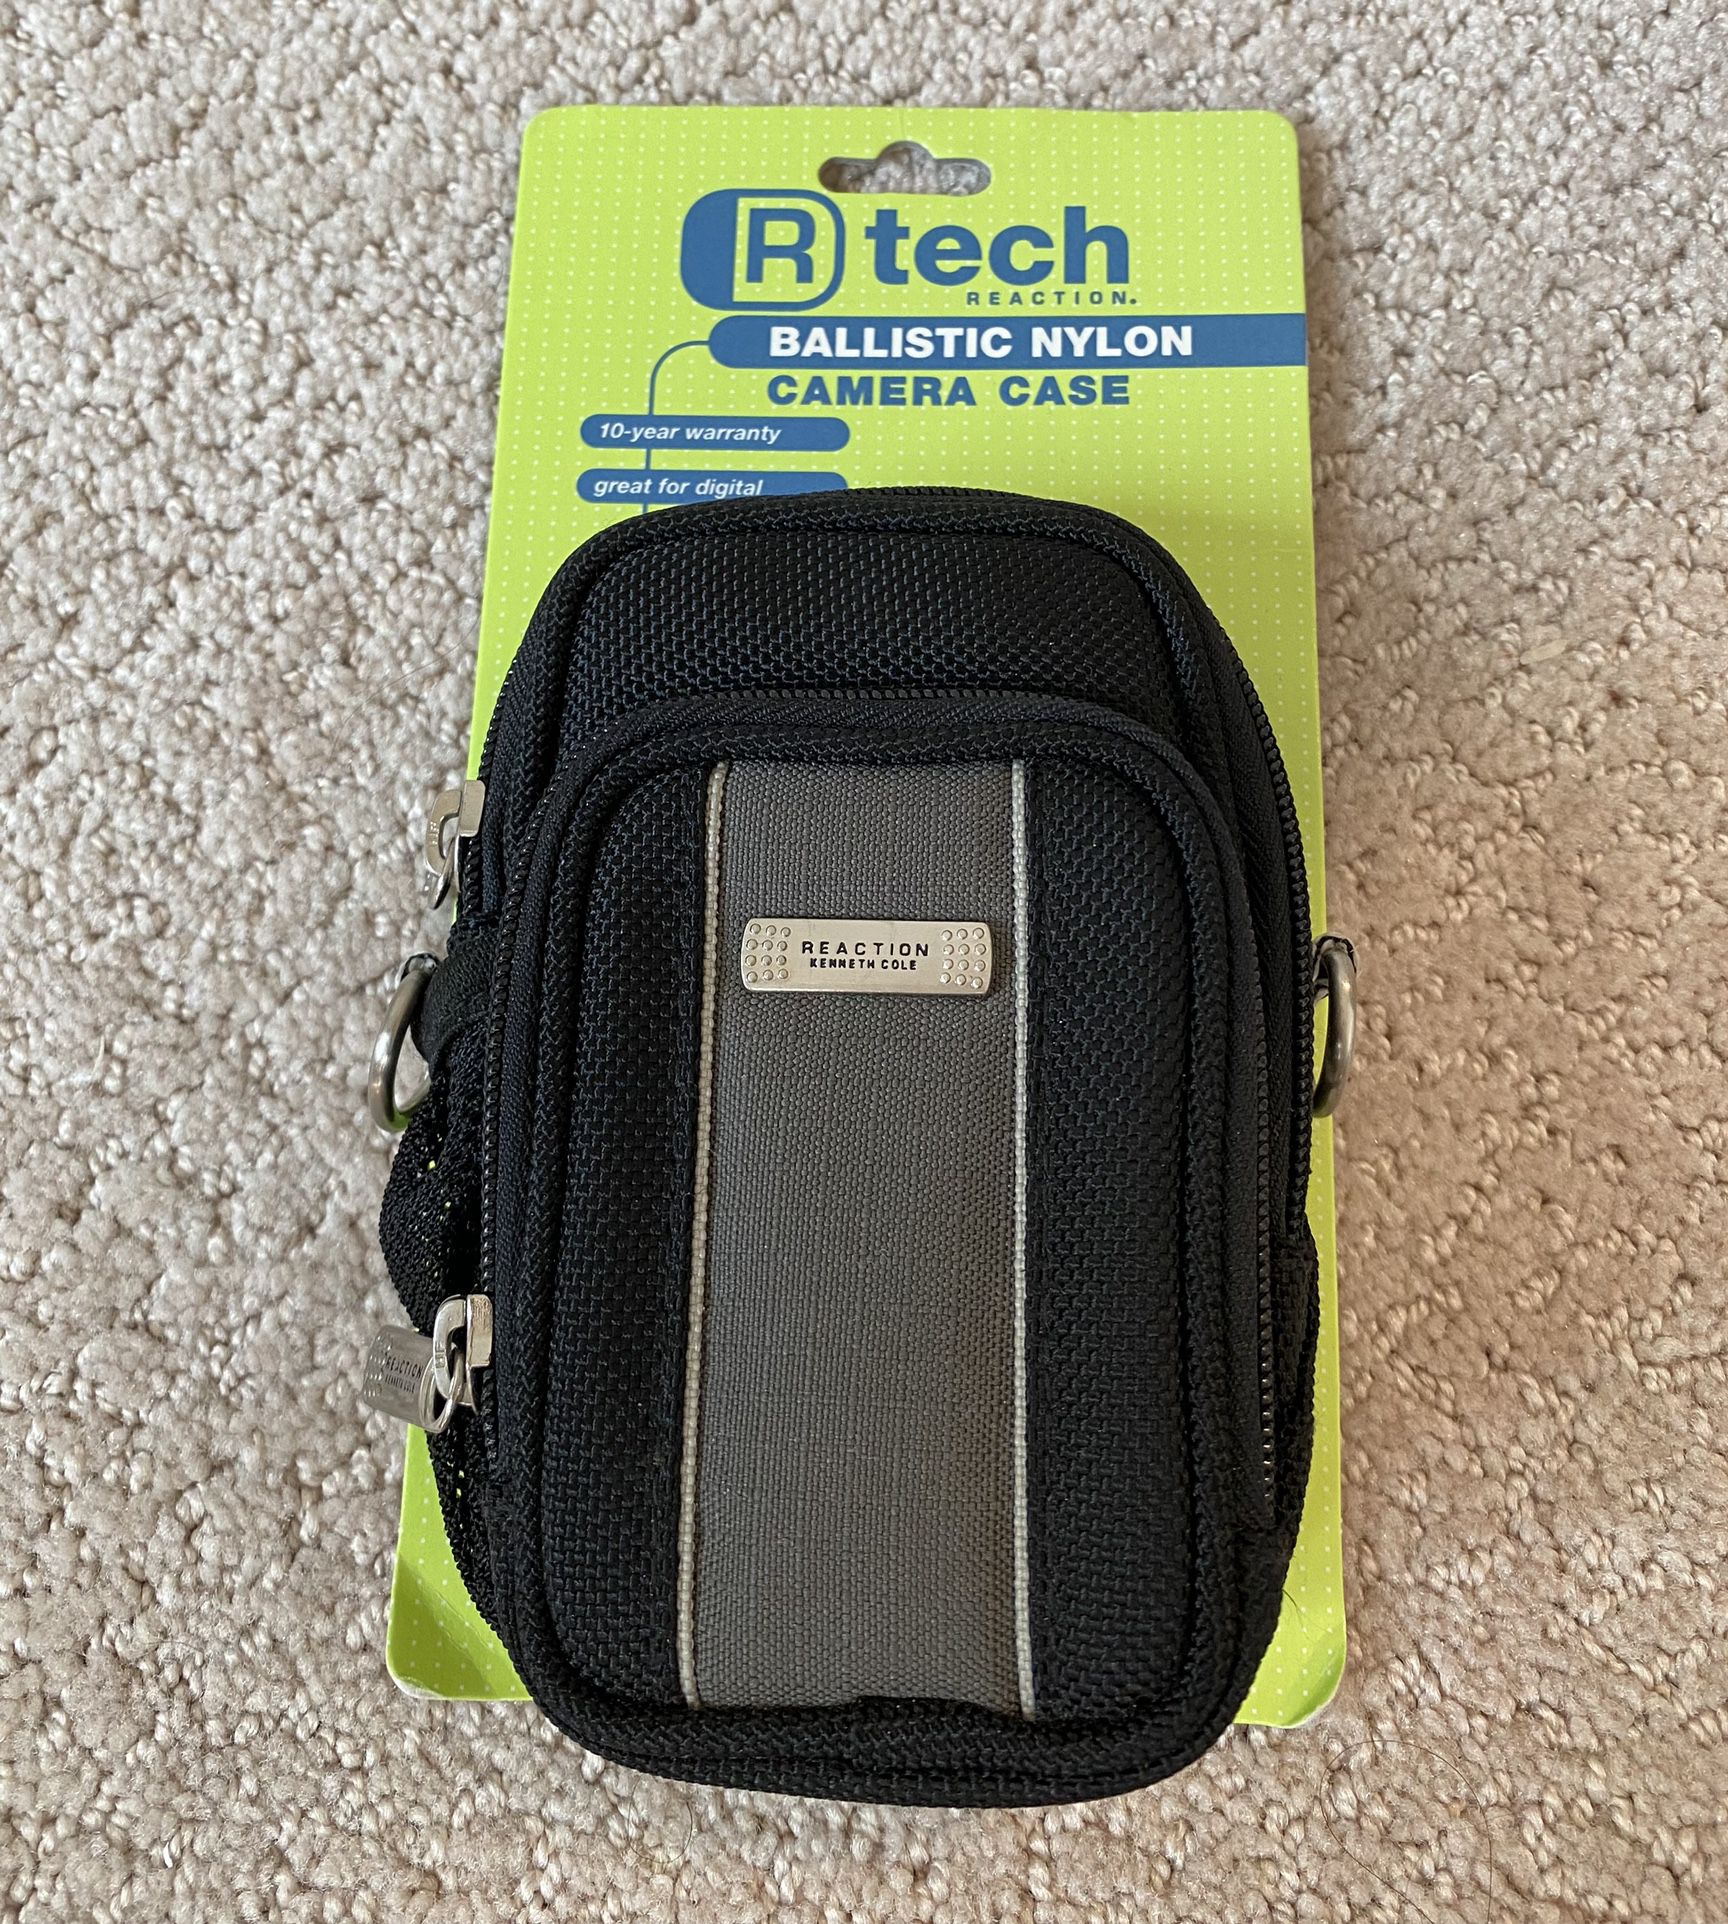 RTech Digital Camera Bag With Strap